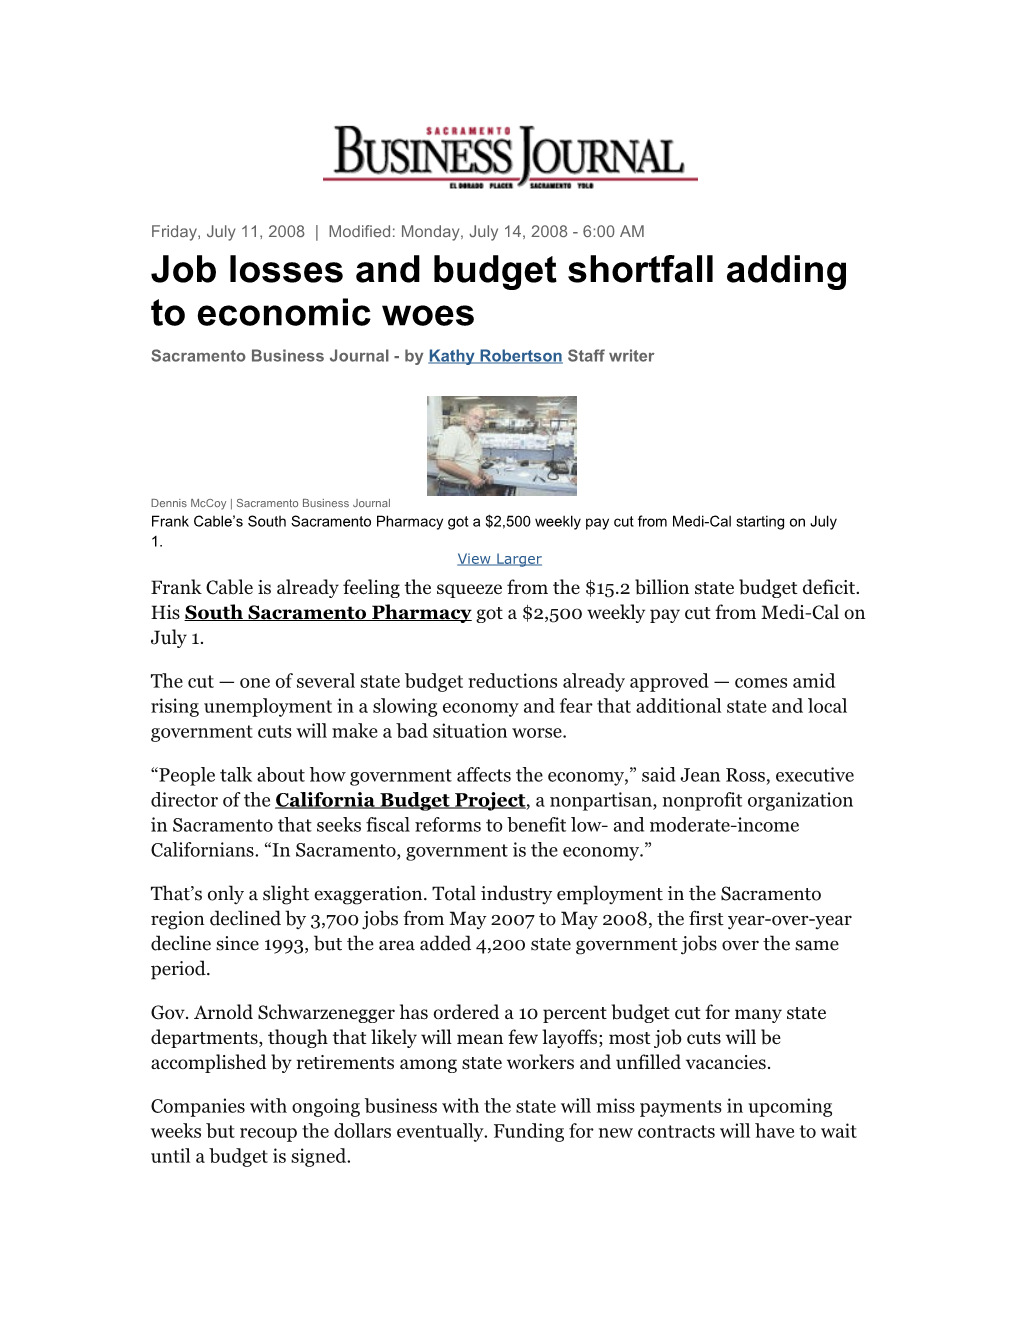 Job Losses and Budget Shortfall Adding to Economic Woes